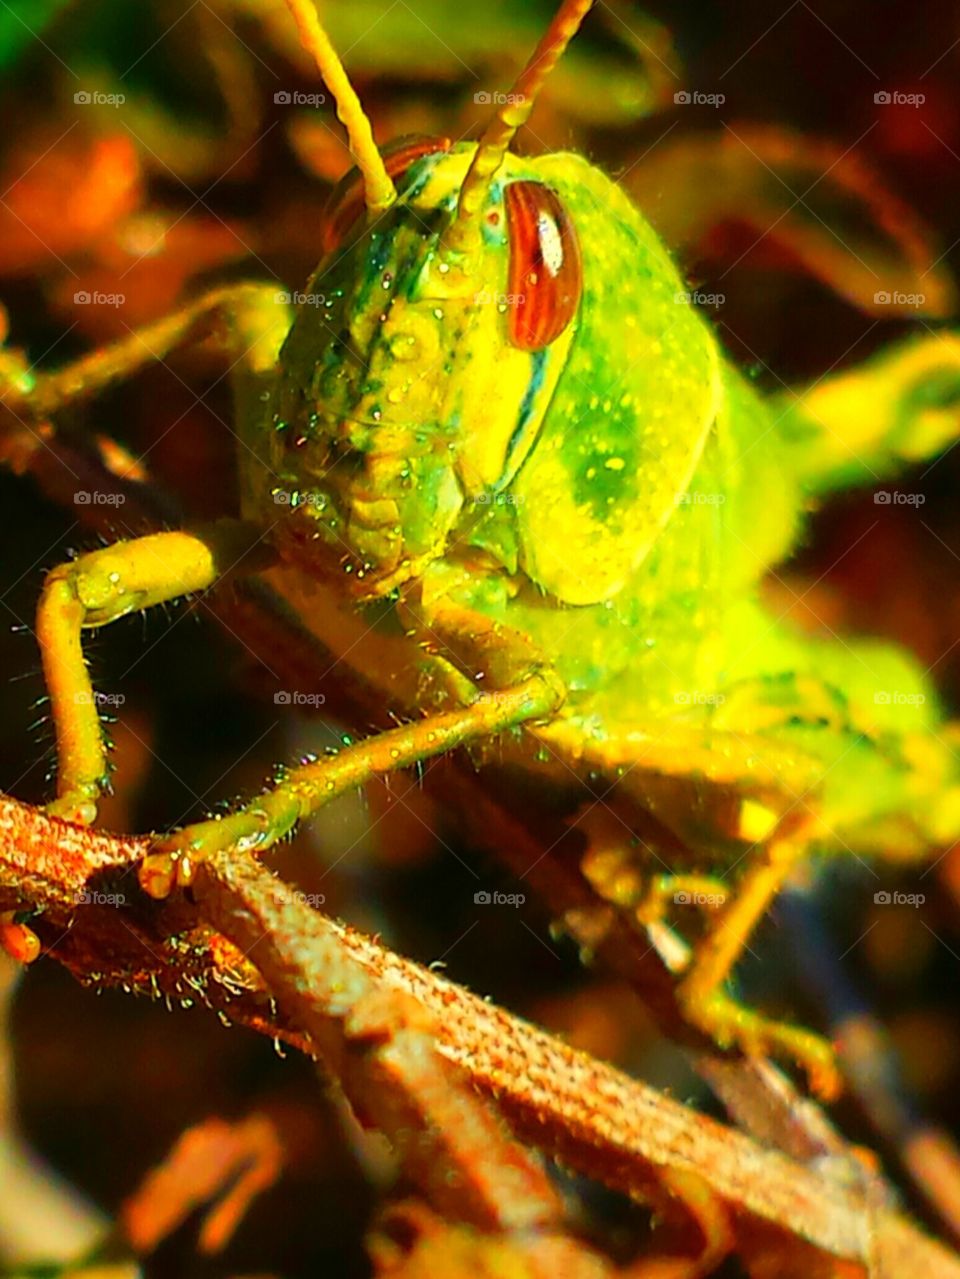 "Green Grasshopper"